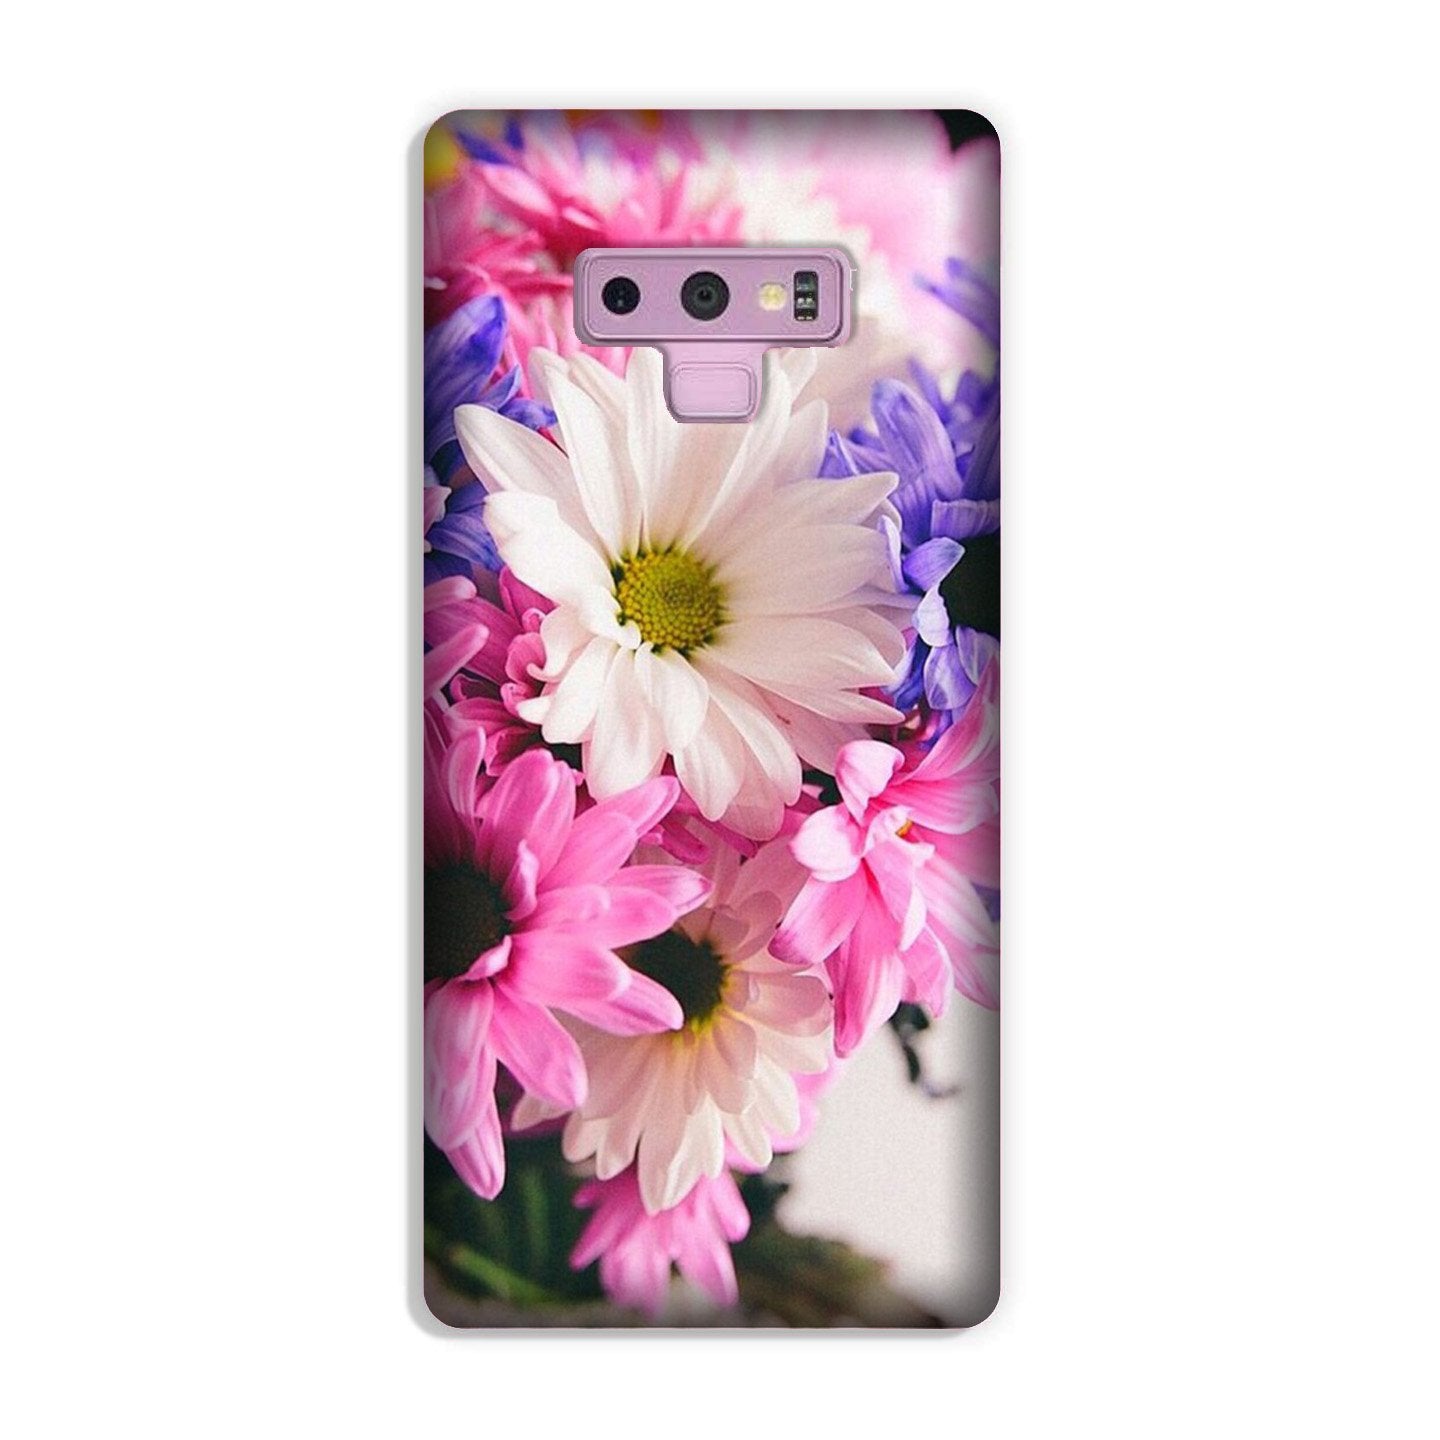 Coloful Daisy Case for Galaxy Note 9